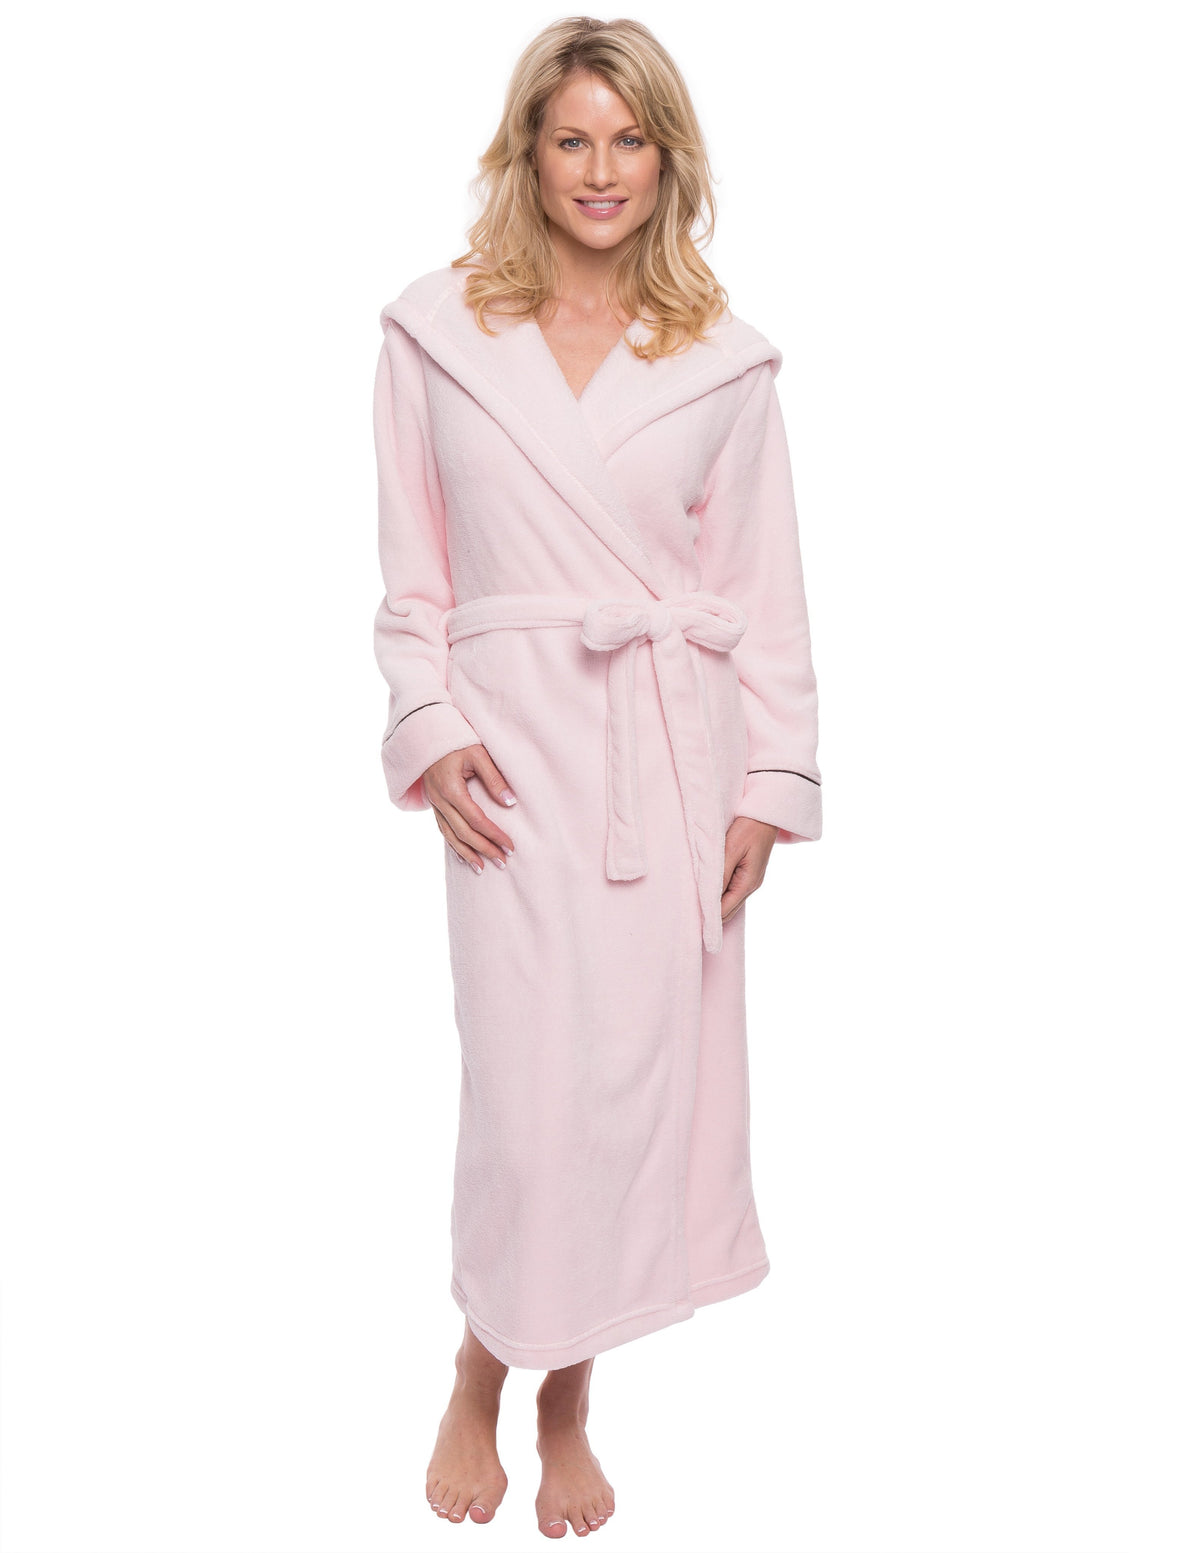 Women's Premium Coral Fleece Plush Spa/Bath Hooded Robe - Light Pink